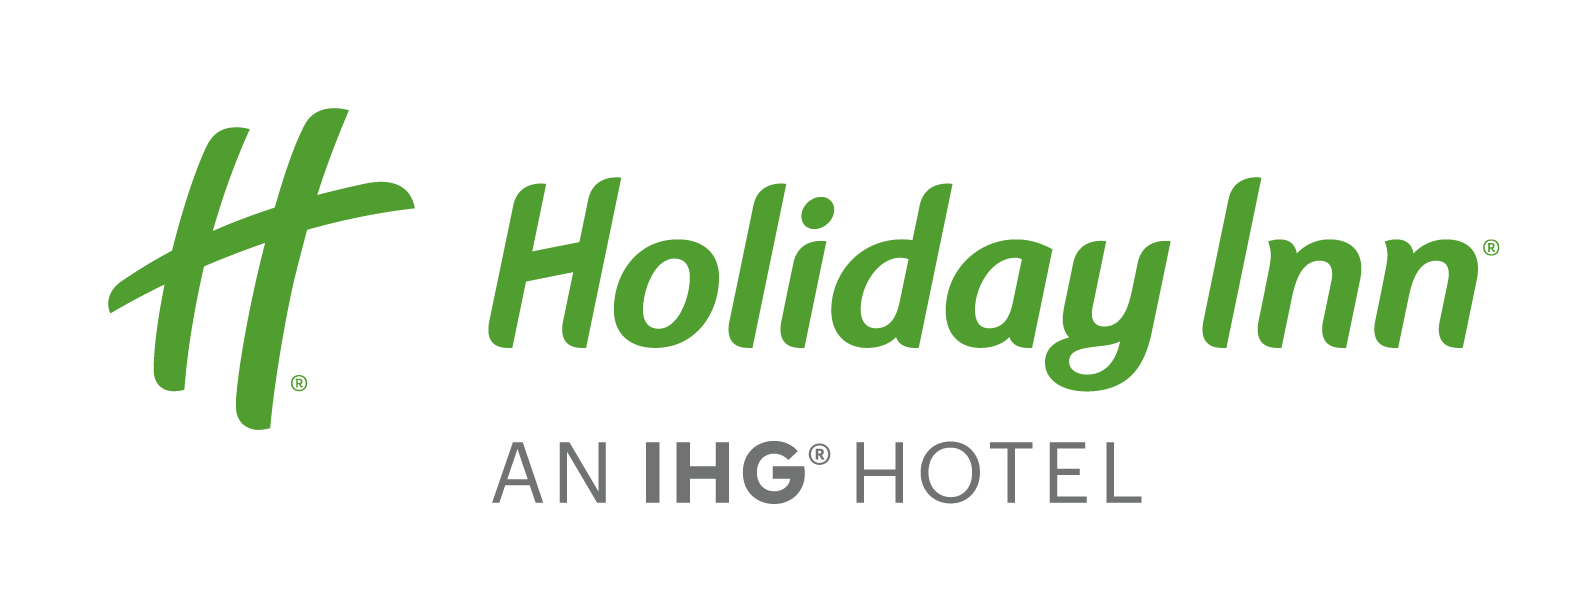 Holiday Inn Logo - Holiday Inn Png Logo Transparent PNG Logos